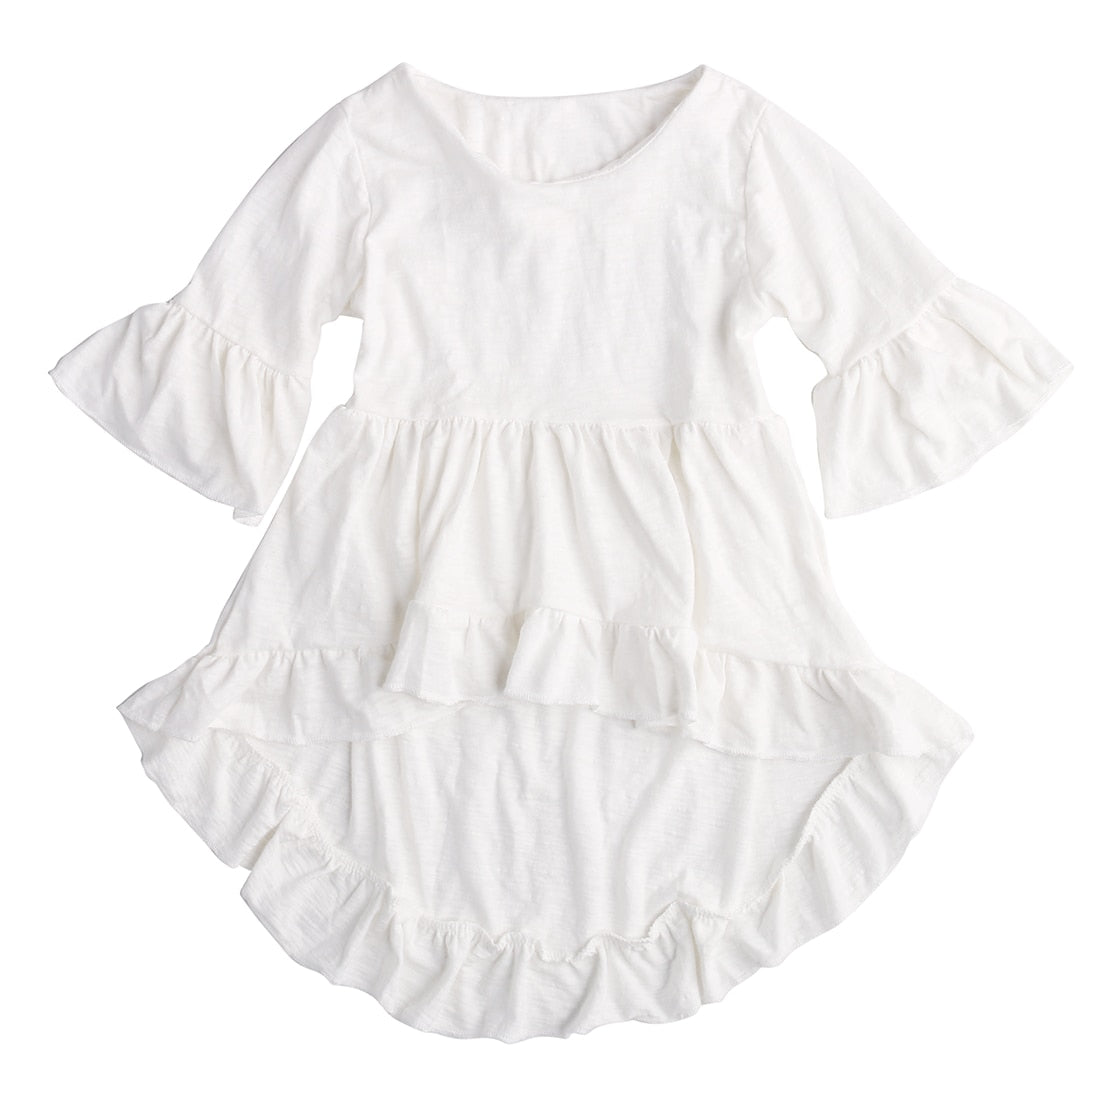 White Baby Girls Dress Frills Flare Sleeve Top T-Shirt Party Ruffles Hem Dresses 1-6Y - ebowsos